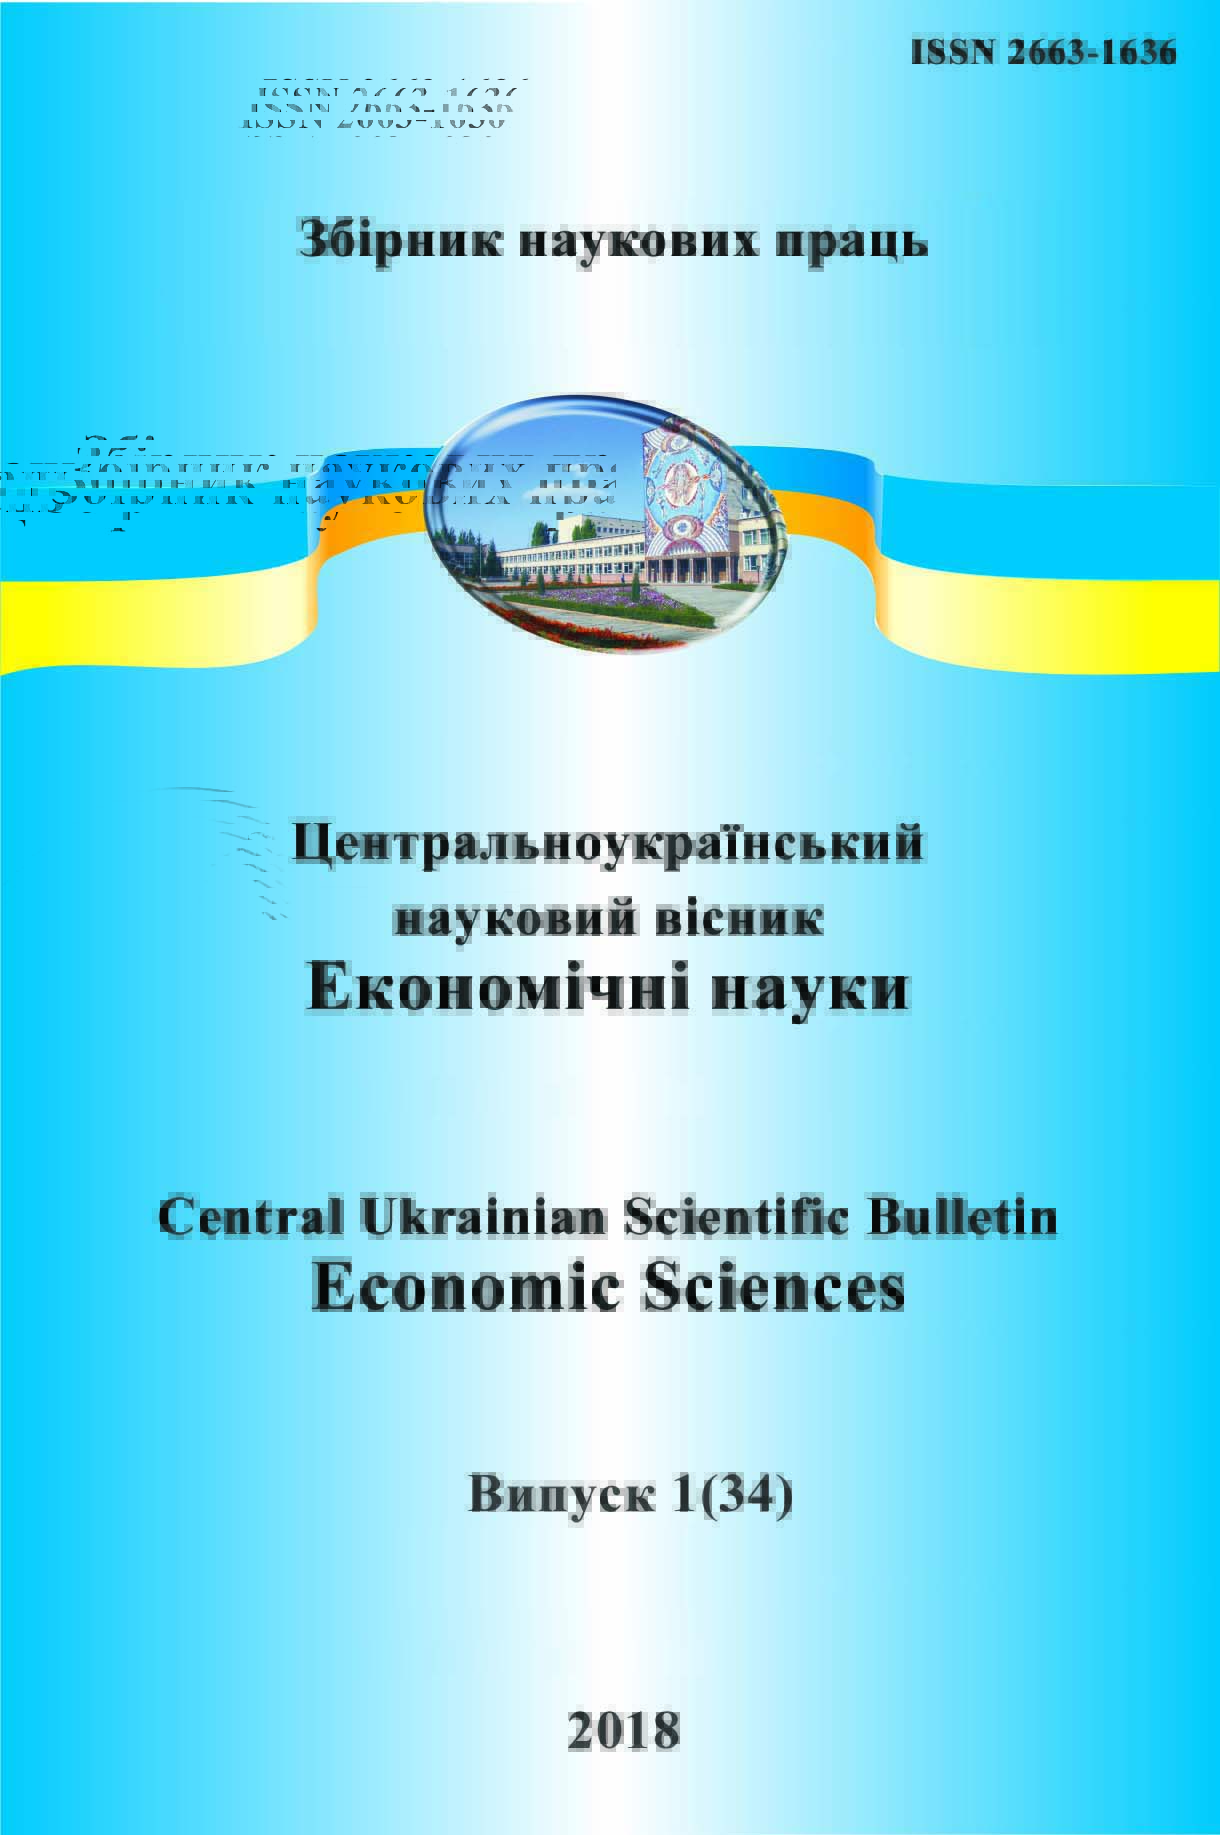 Central Ukrainian Scientific Bulletin. Economic Sciences Cover Image